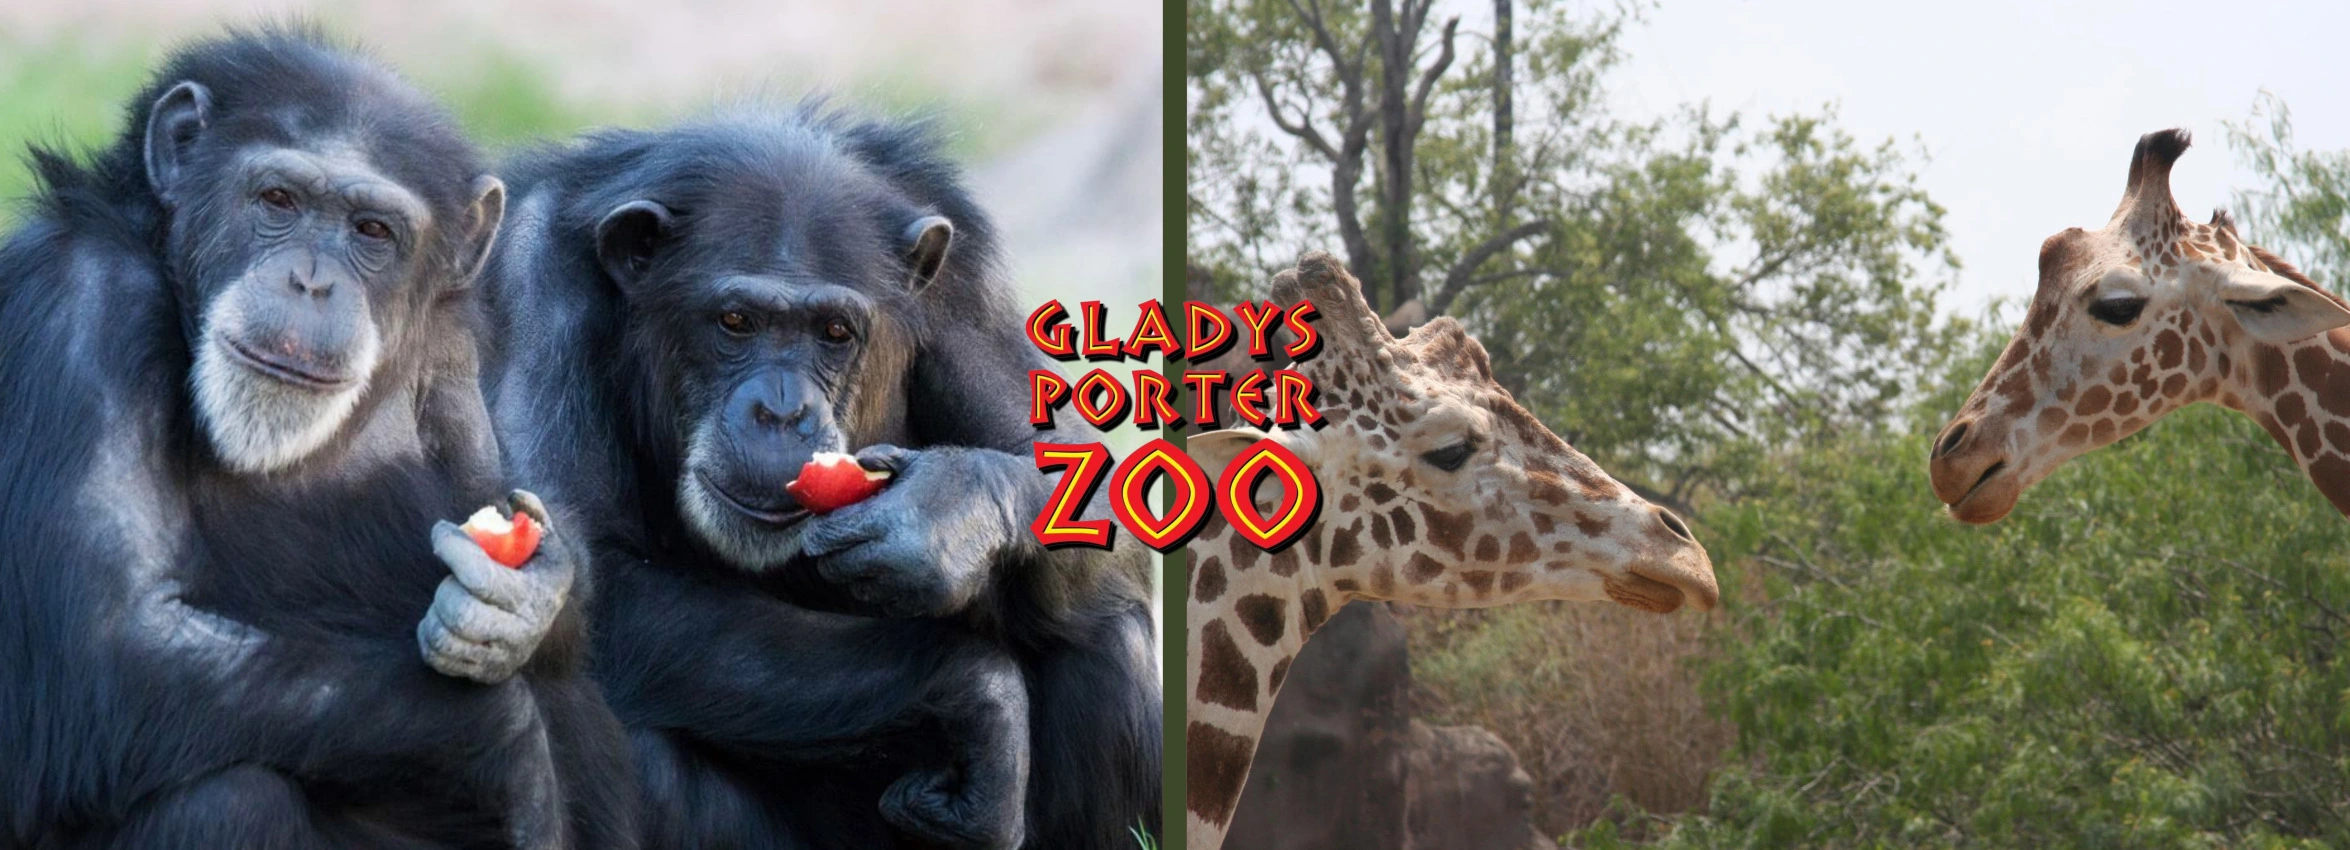 Gladys-Porter-Zoo_Desktop_ET